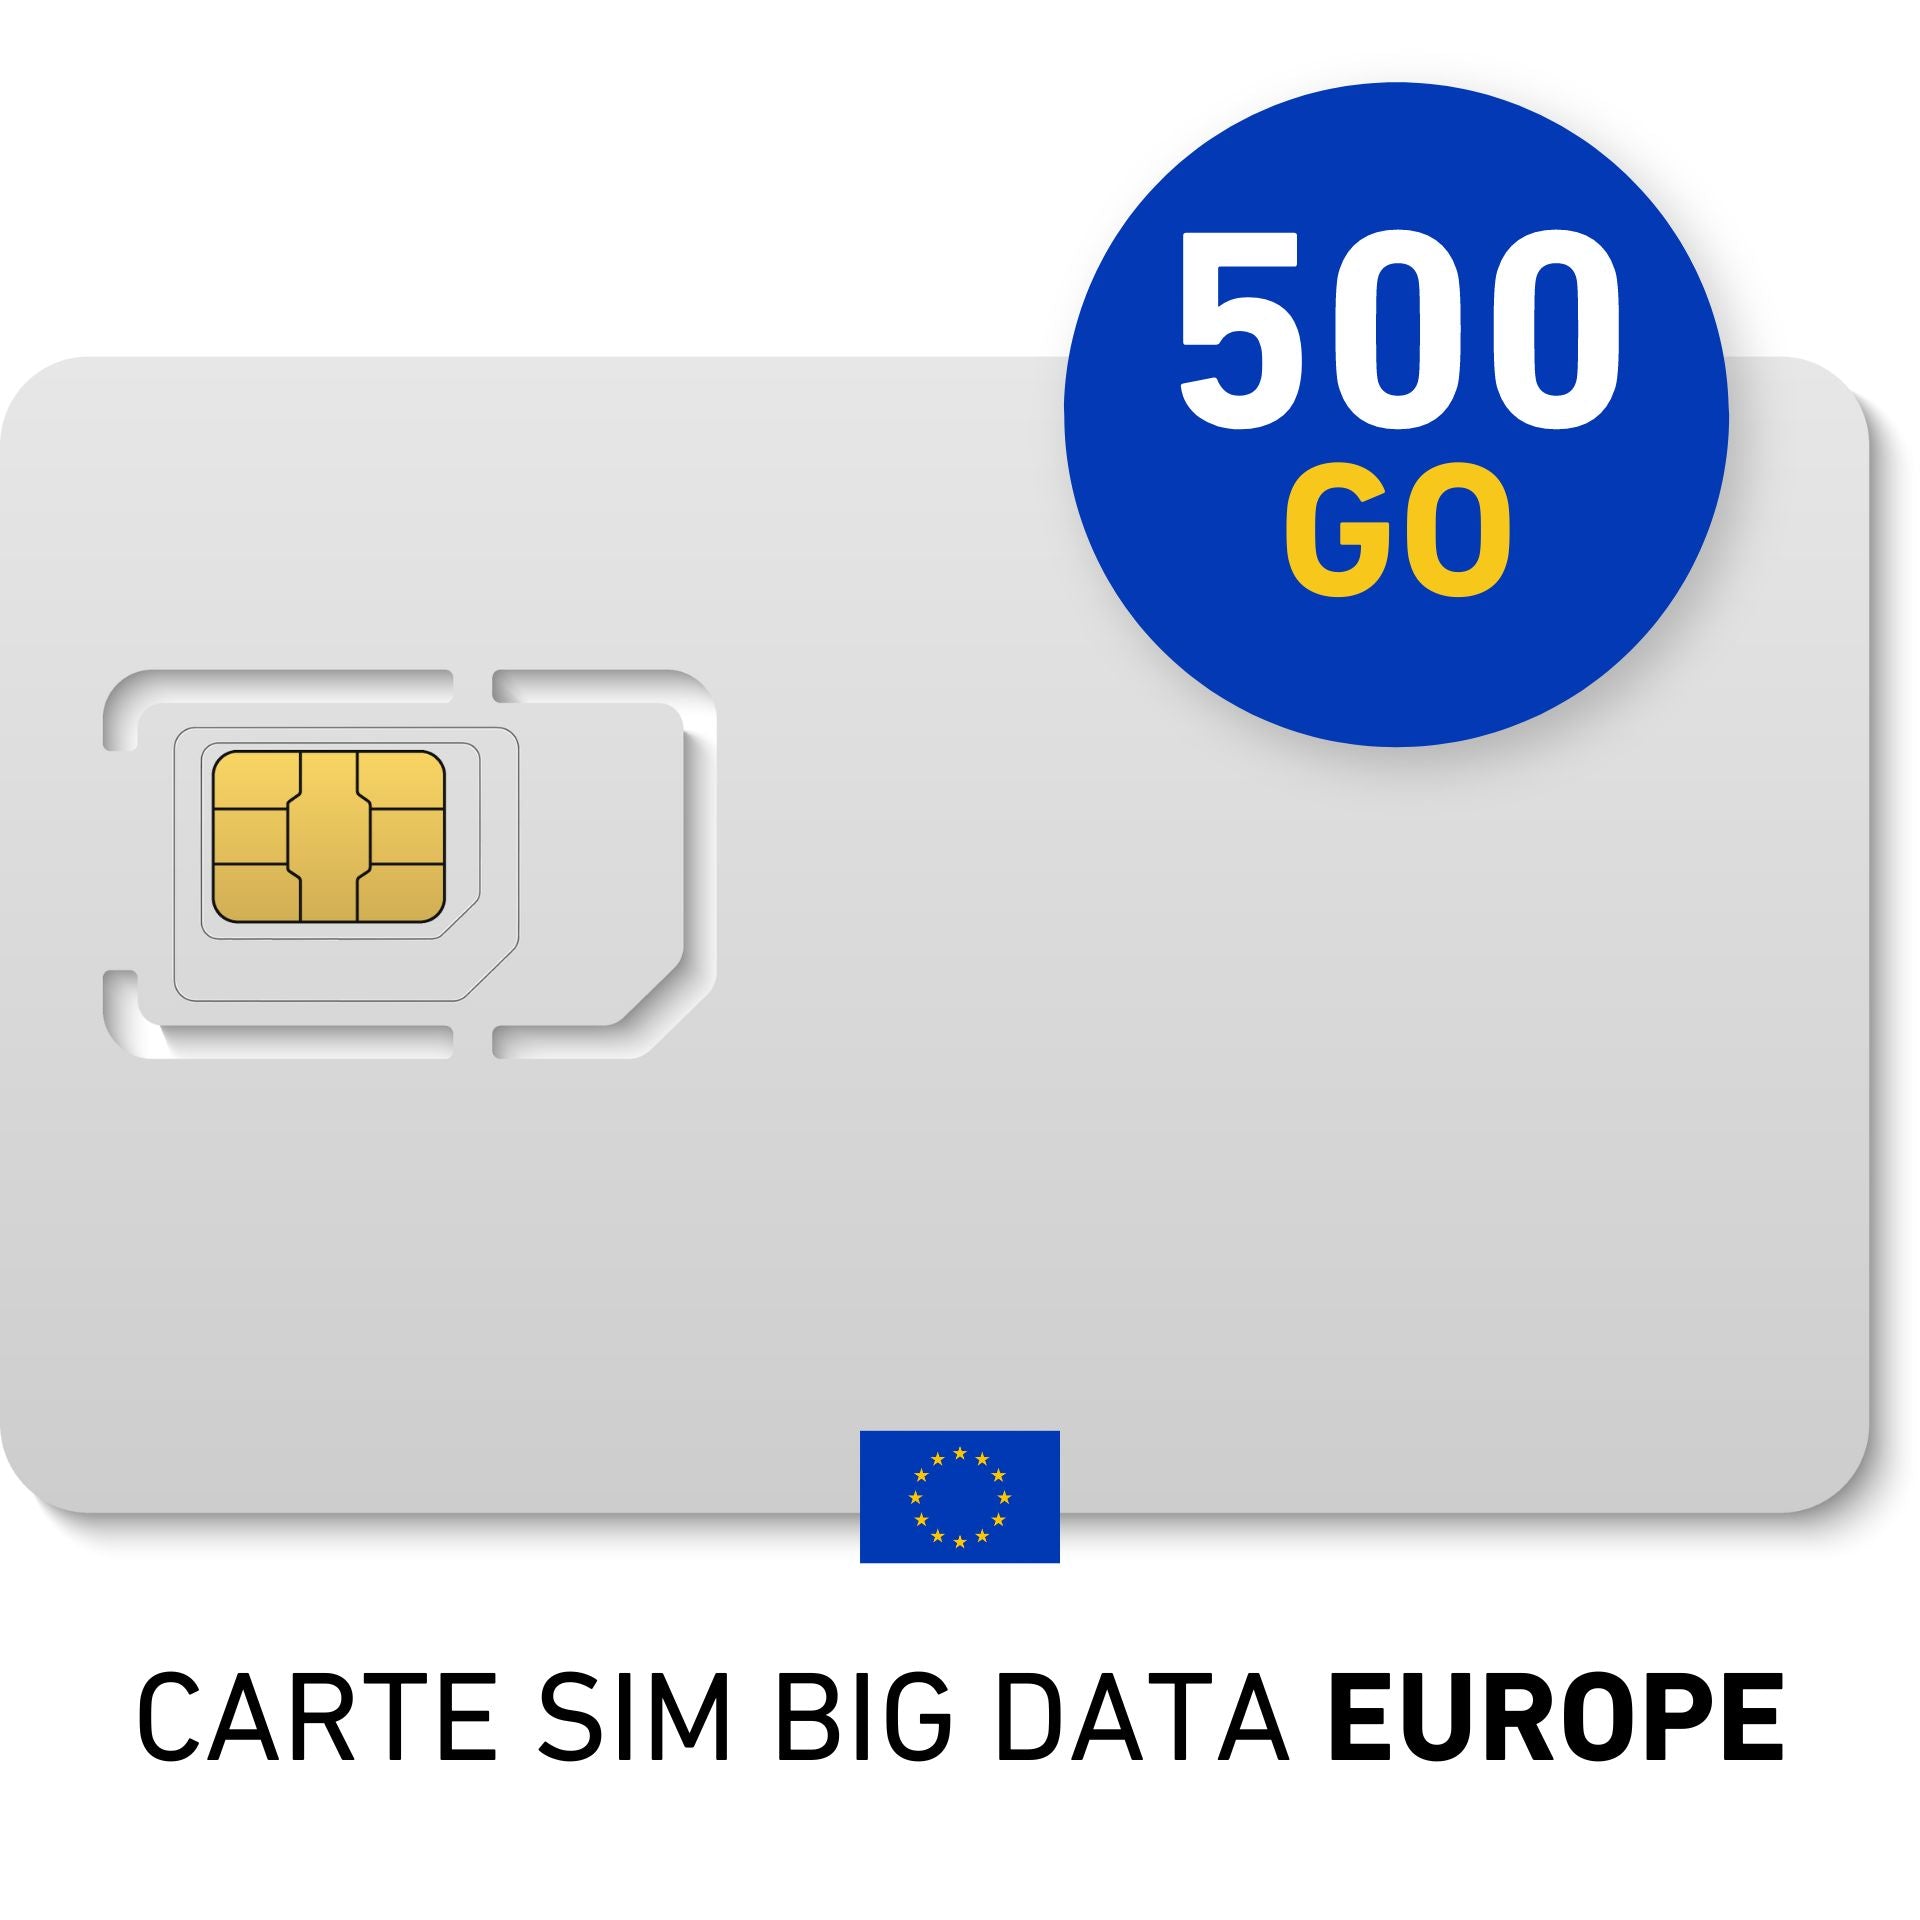 Abono mensual TARJETA SIM Grandes Datos Europa 500Go